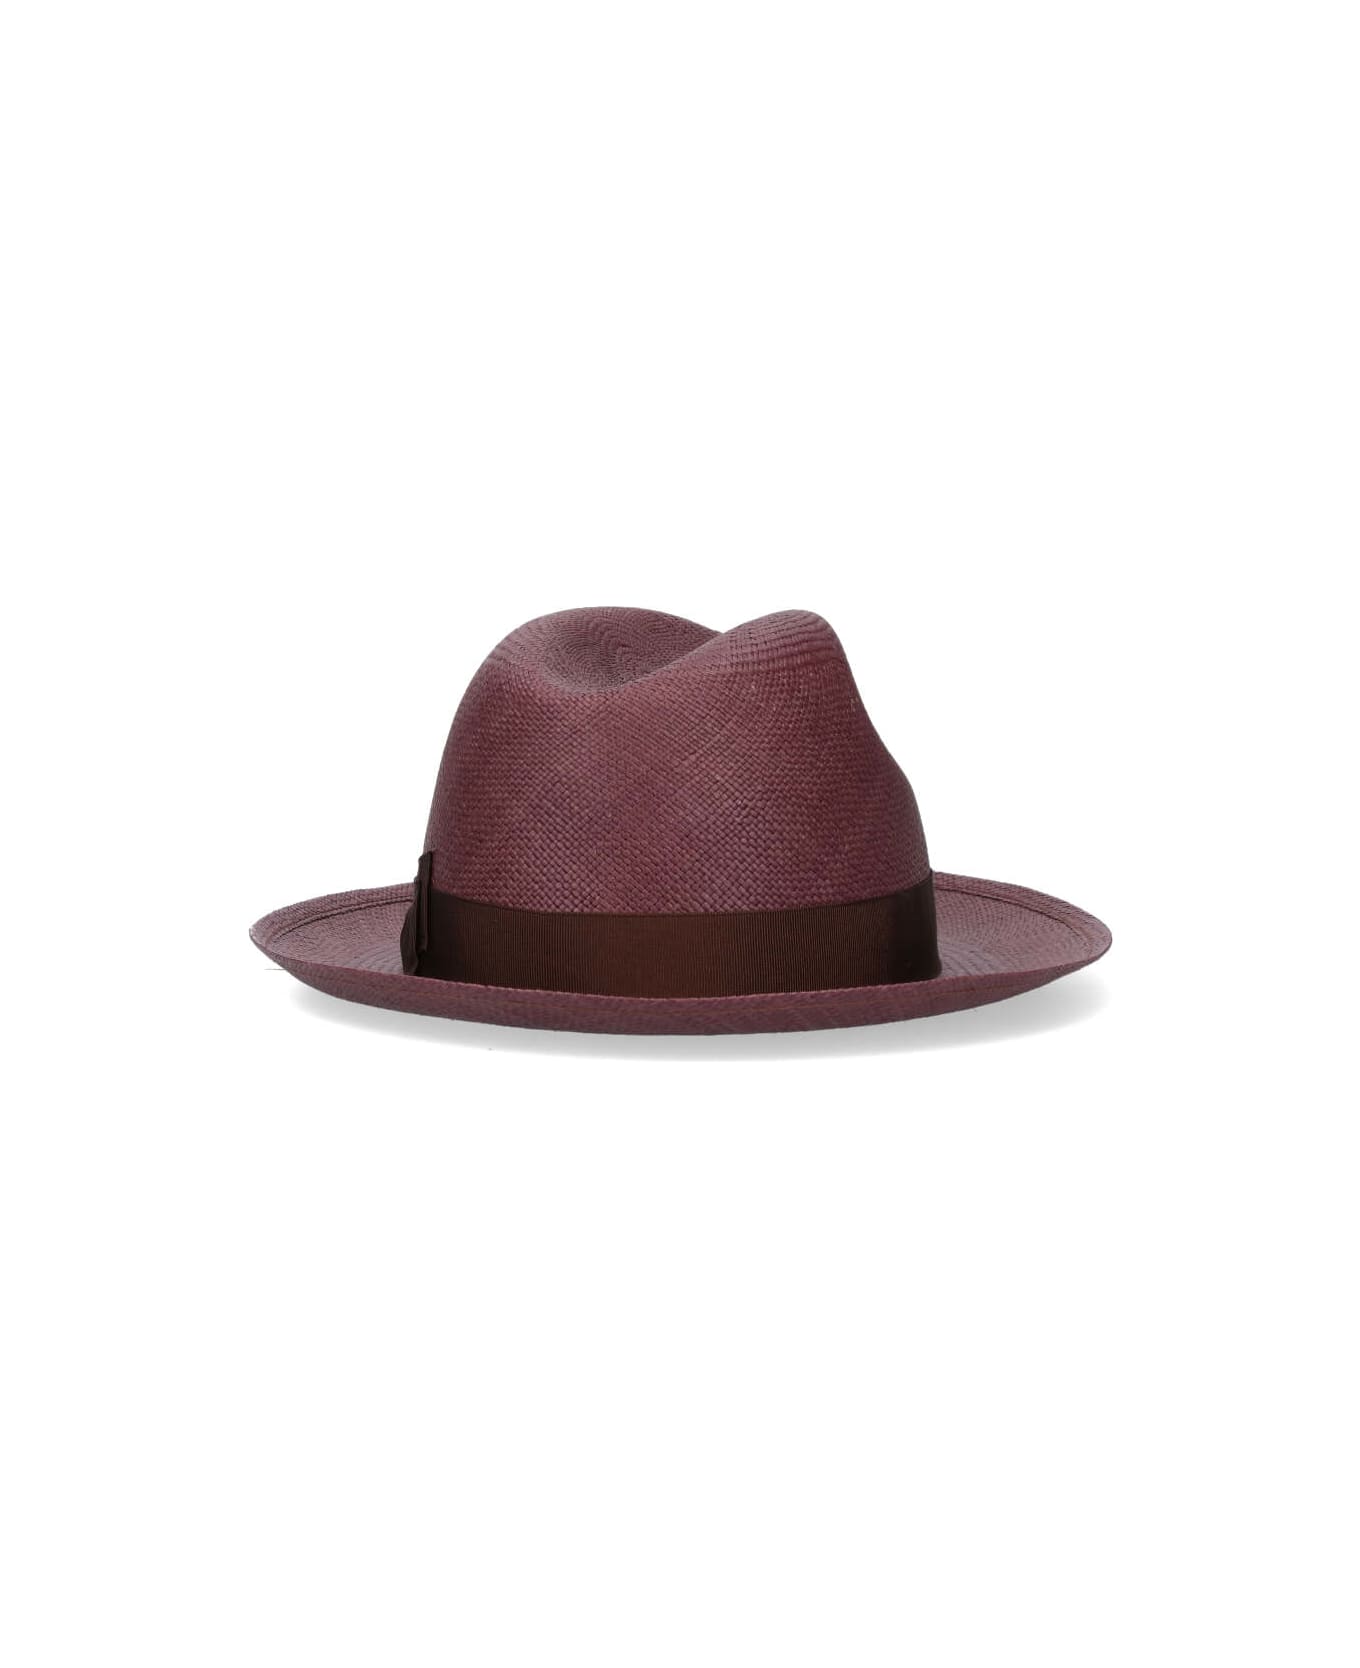 Borsalino 'panama' Hat - Brown 帽子